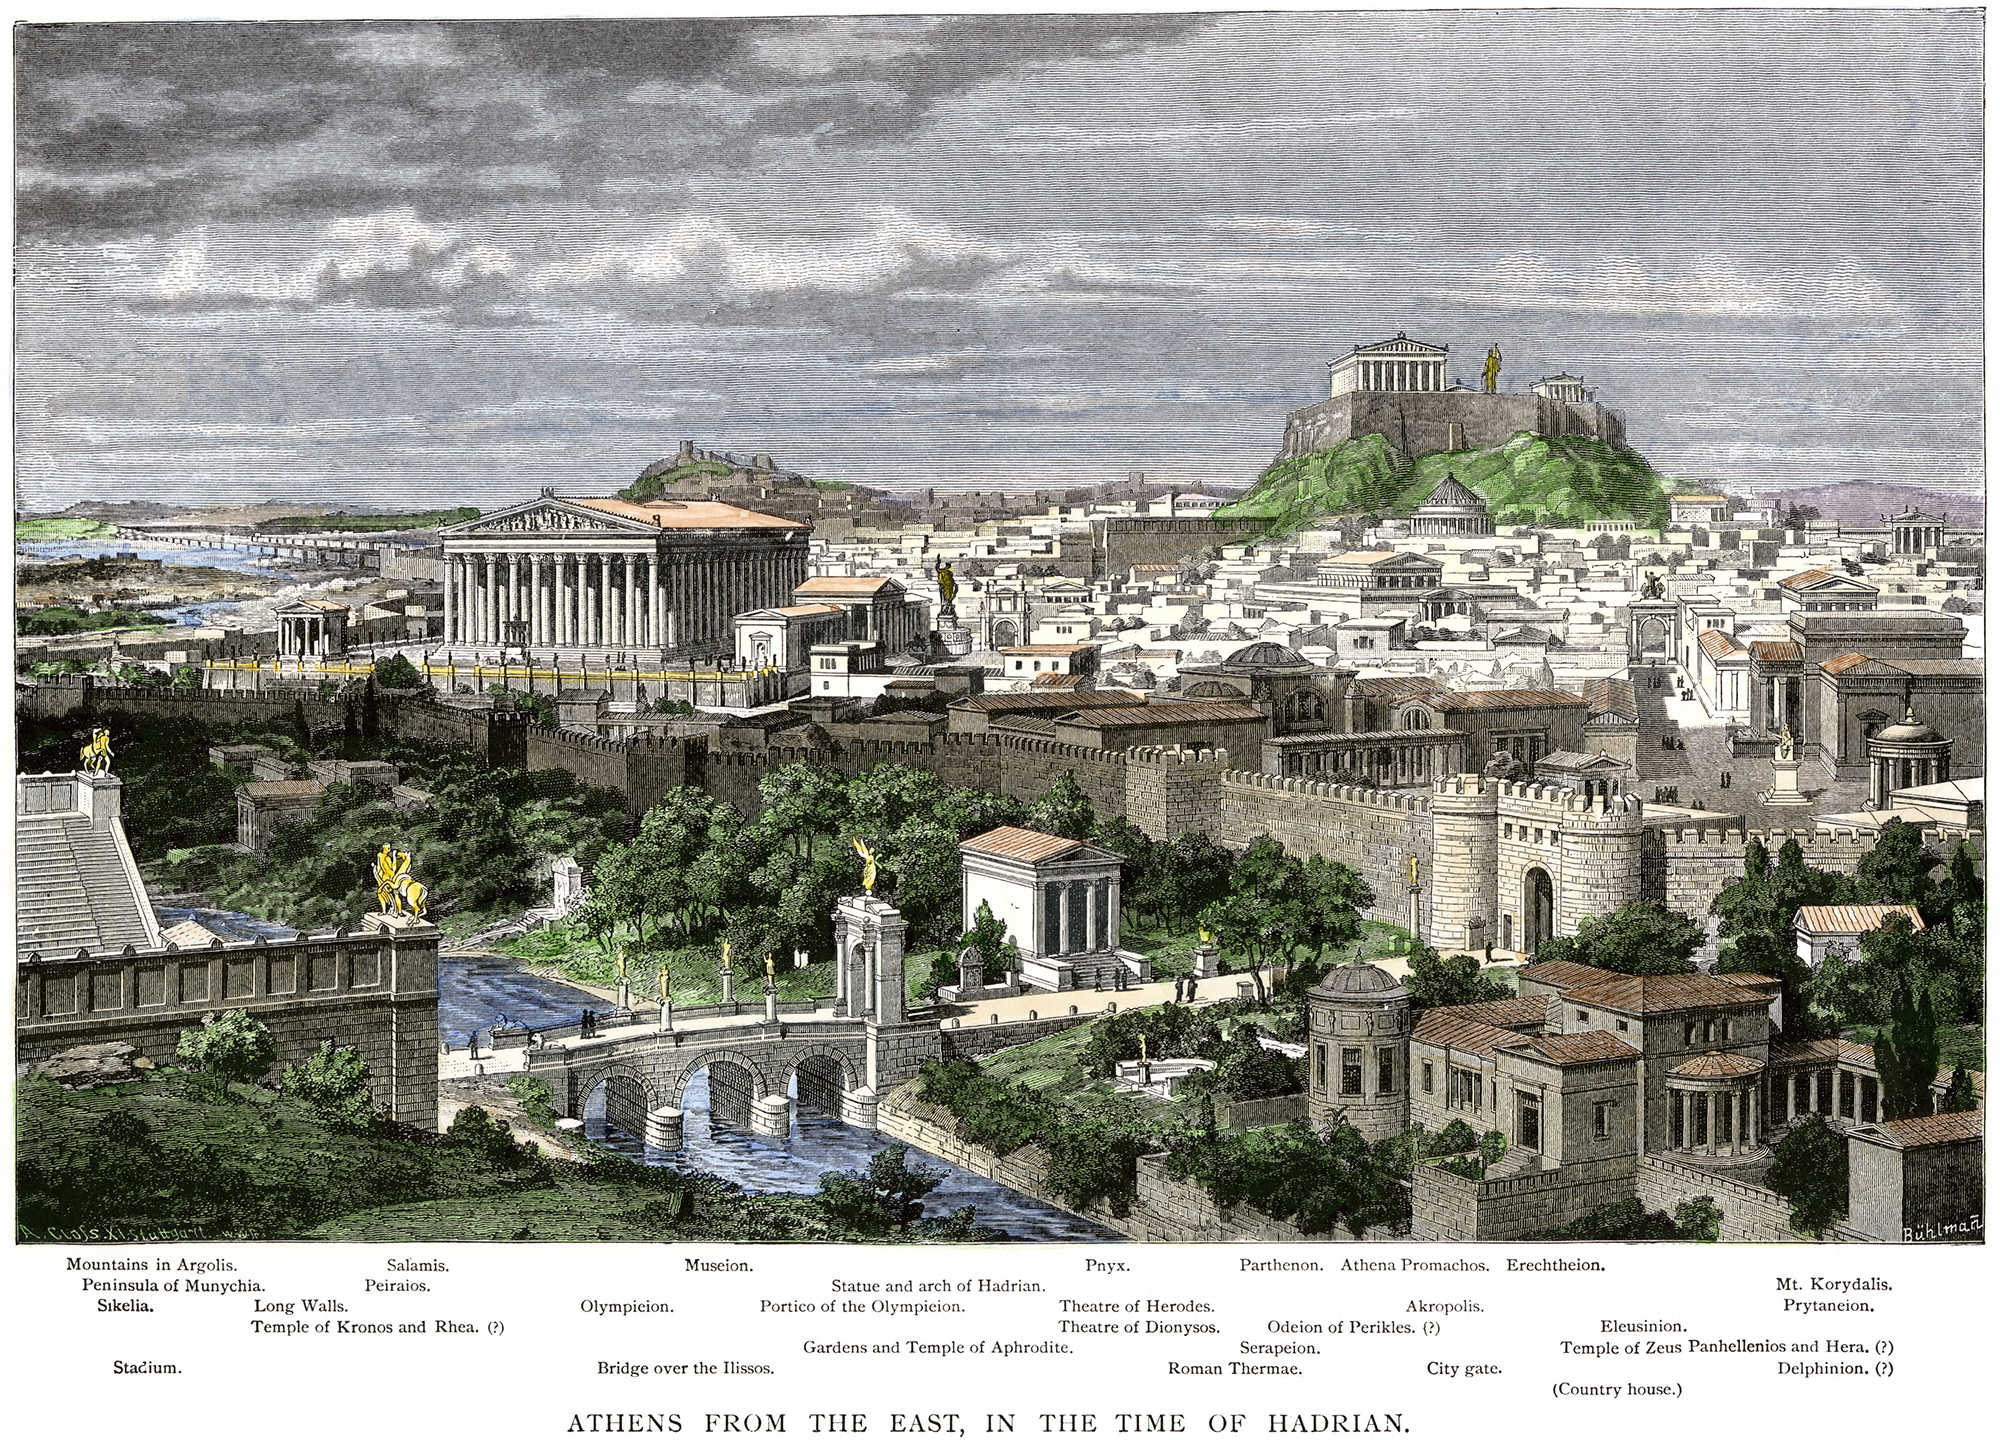 910 Acropolis Sketch Images, Stock Photos & Vectors | Shutterstock